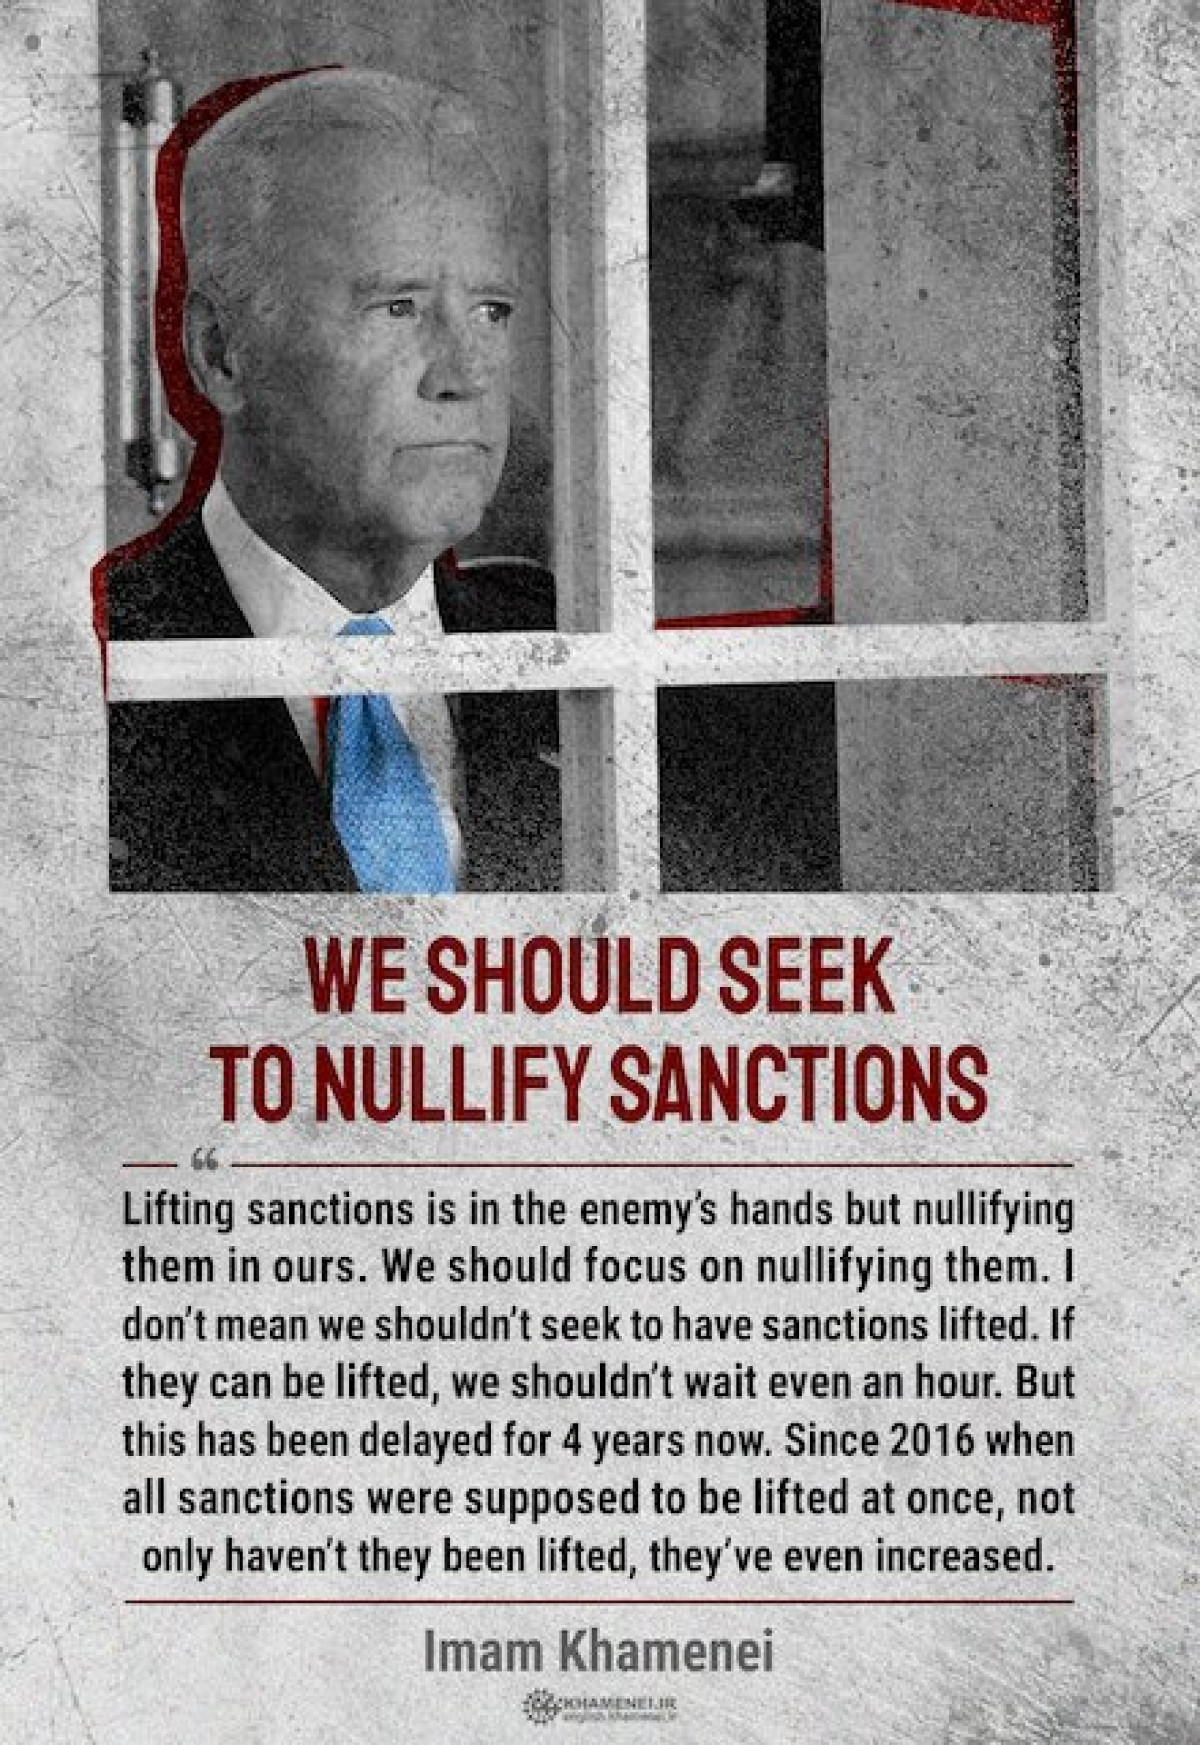 We should seek to nullify sanctions